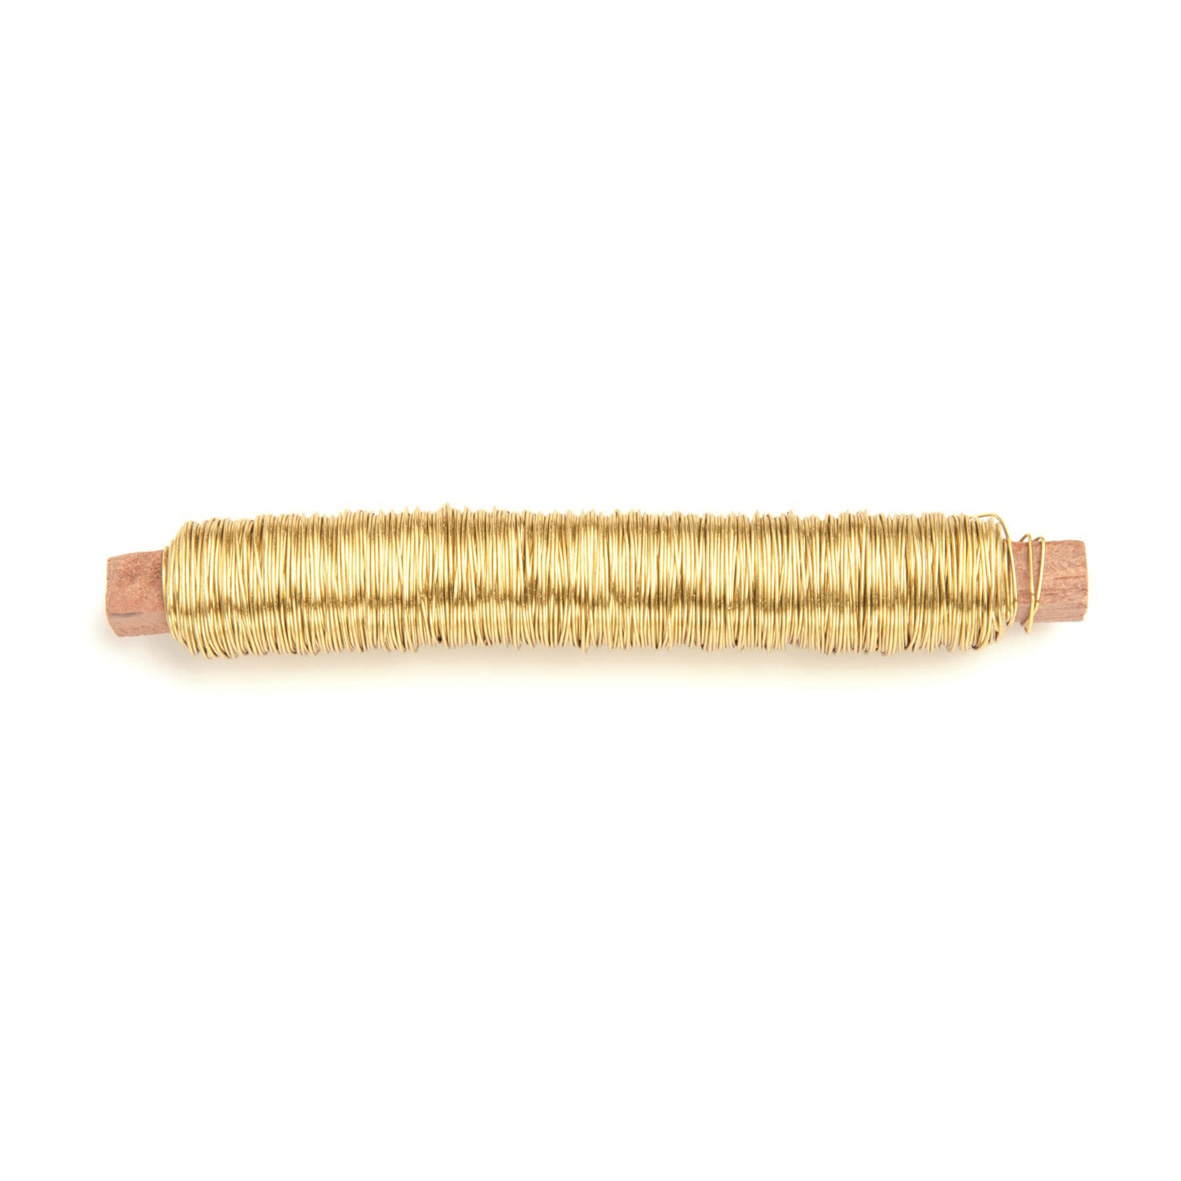 NEU Wickeldraht goldfarben, Stärke 0,5mm, Länge ca. 50m